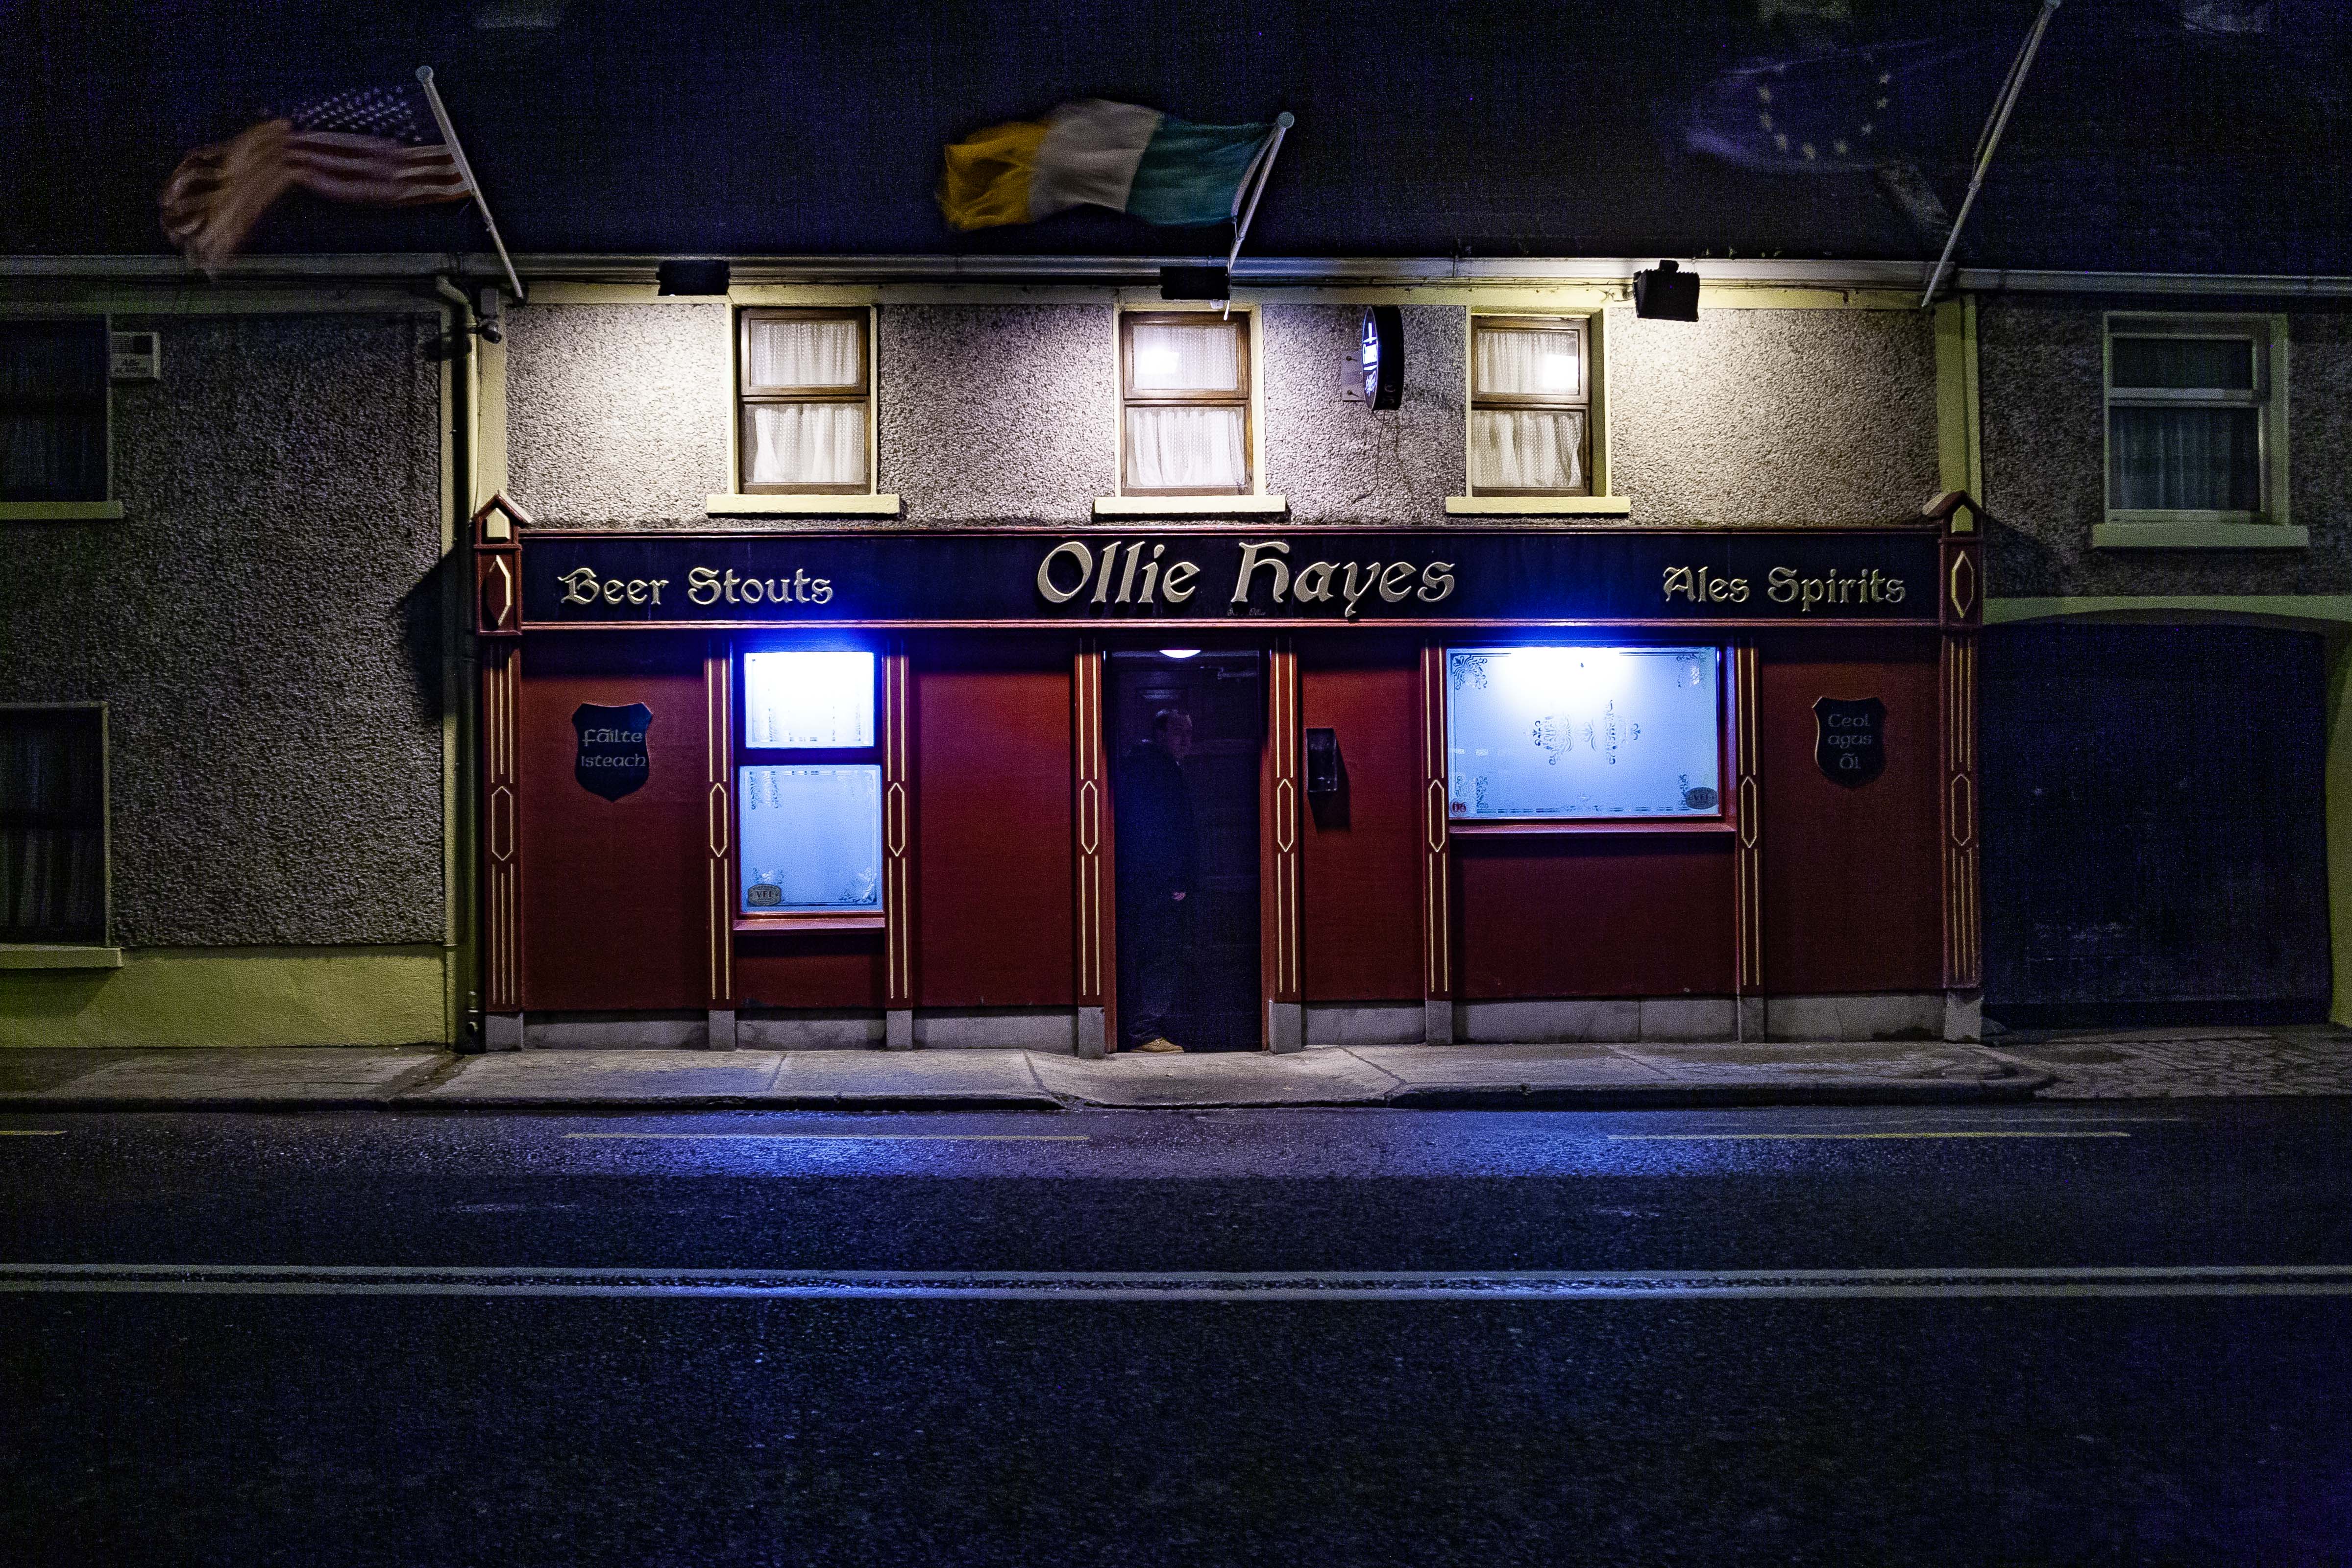 Ireland, Laois Prov, Ollie Hayes Bar, 2009, IMG 0340